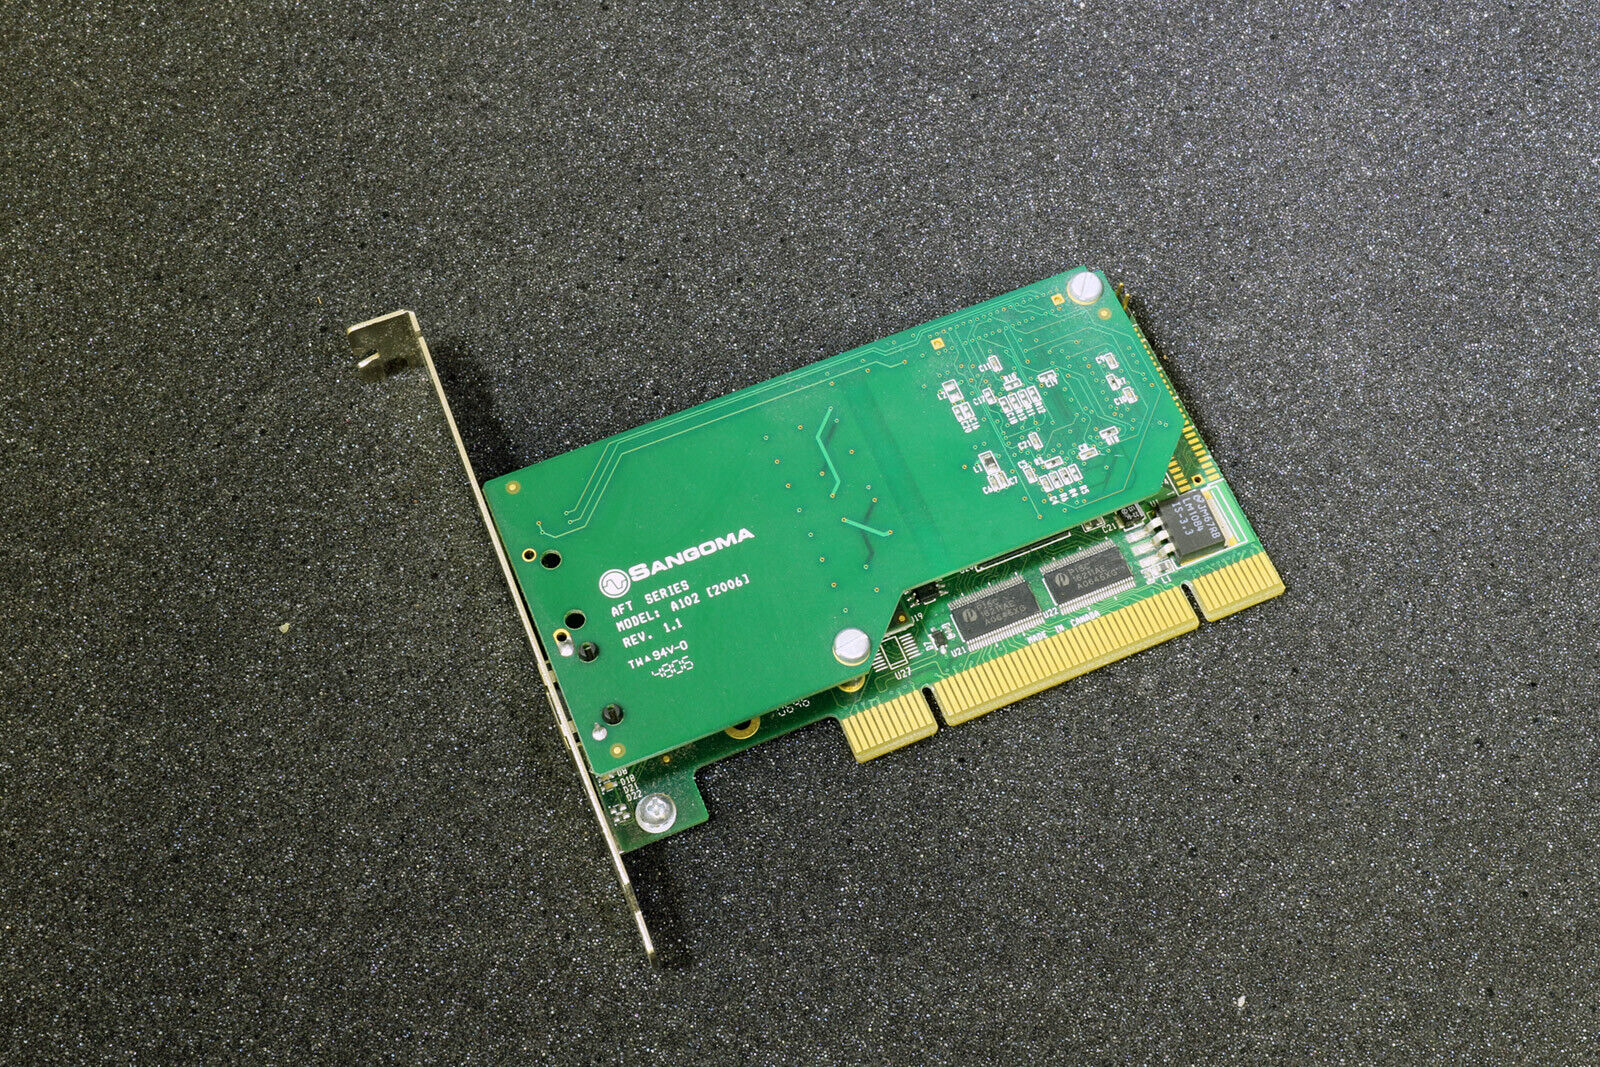 Sangoma A102 AFT BASE PCIe Voics Data Card